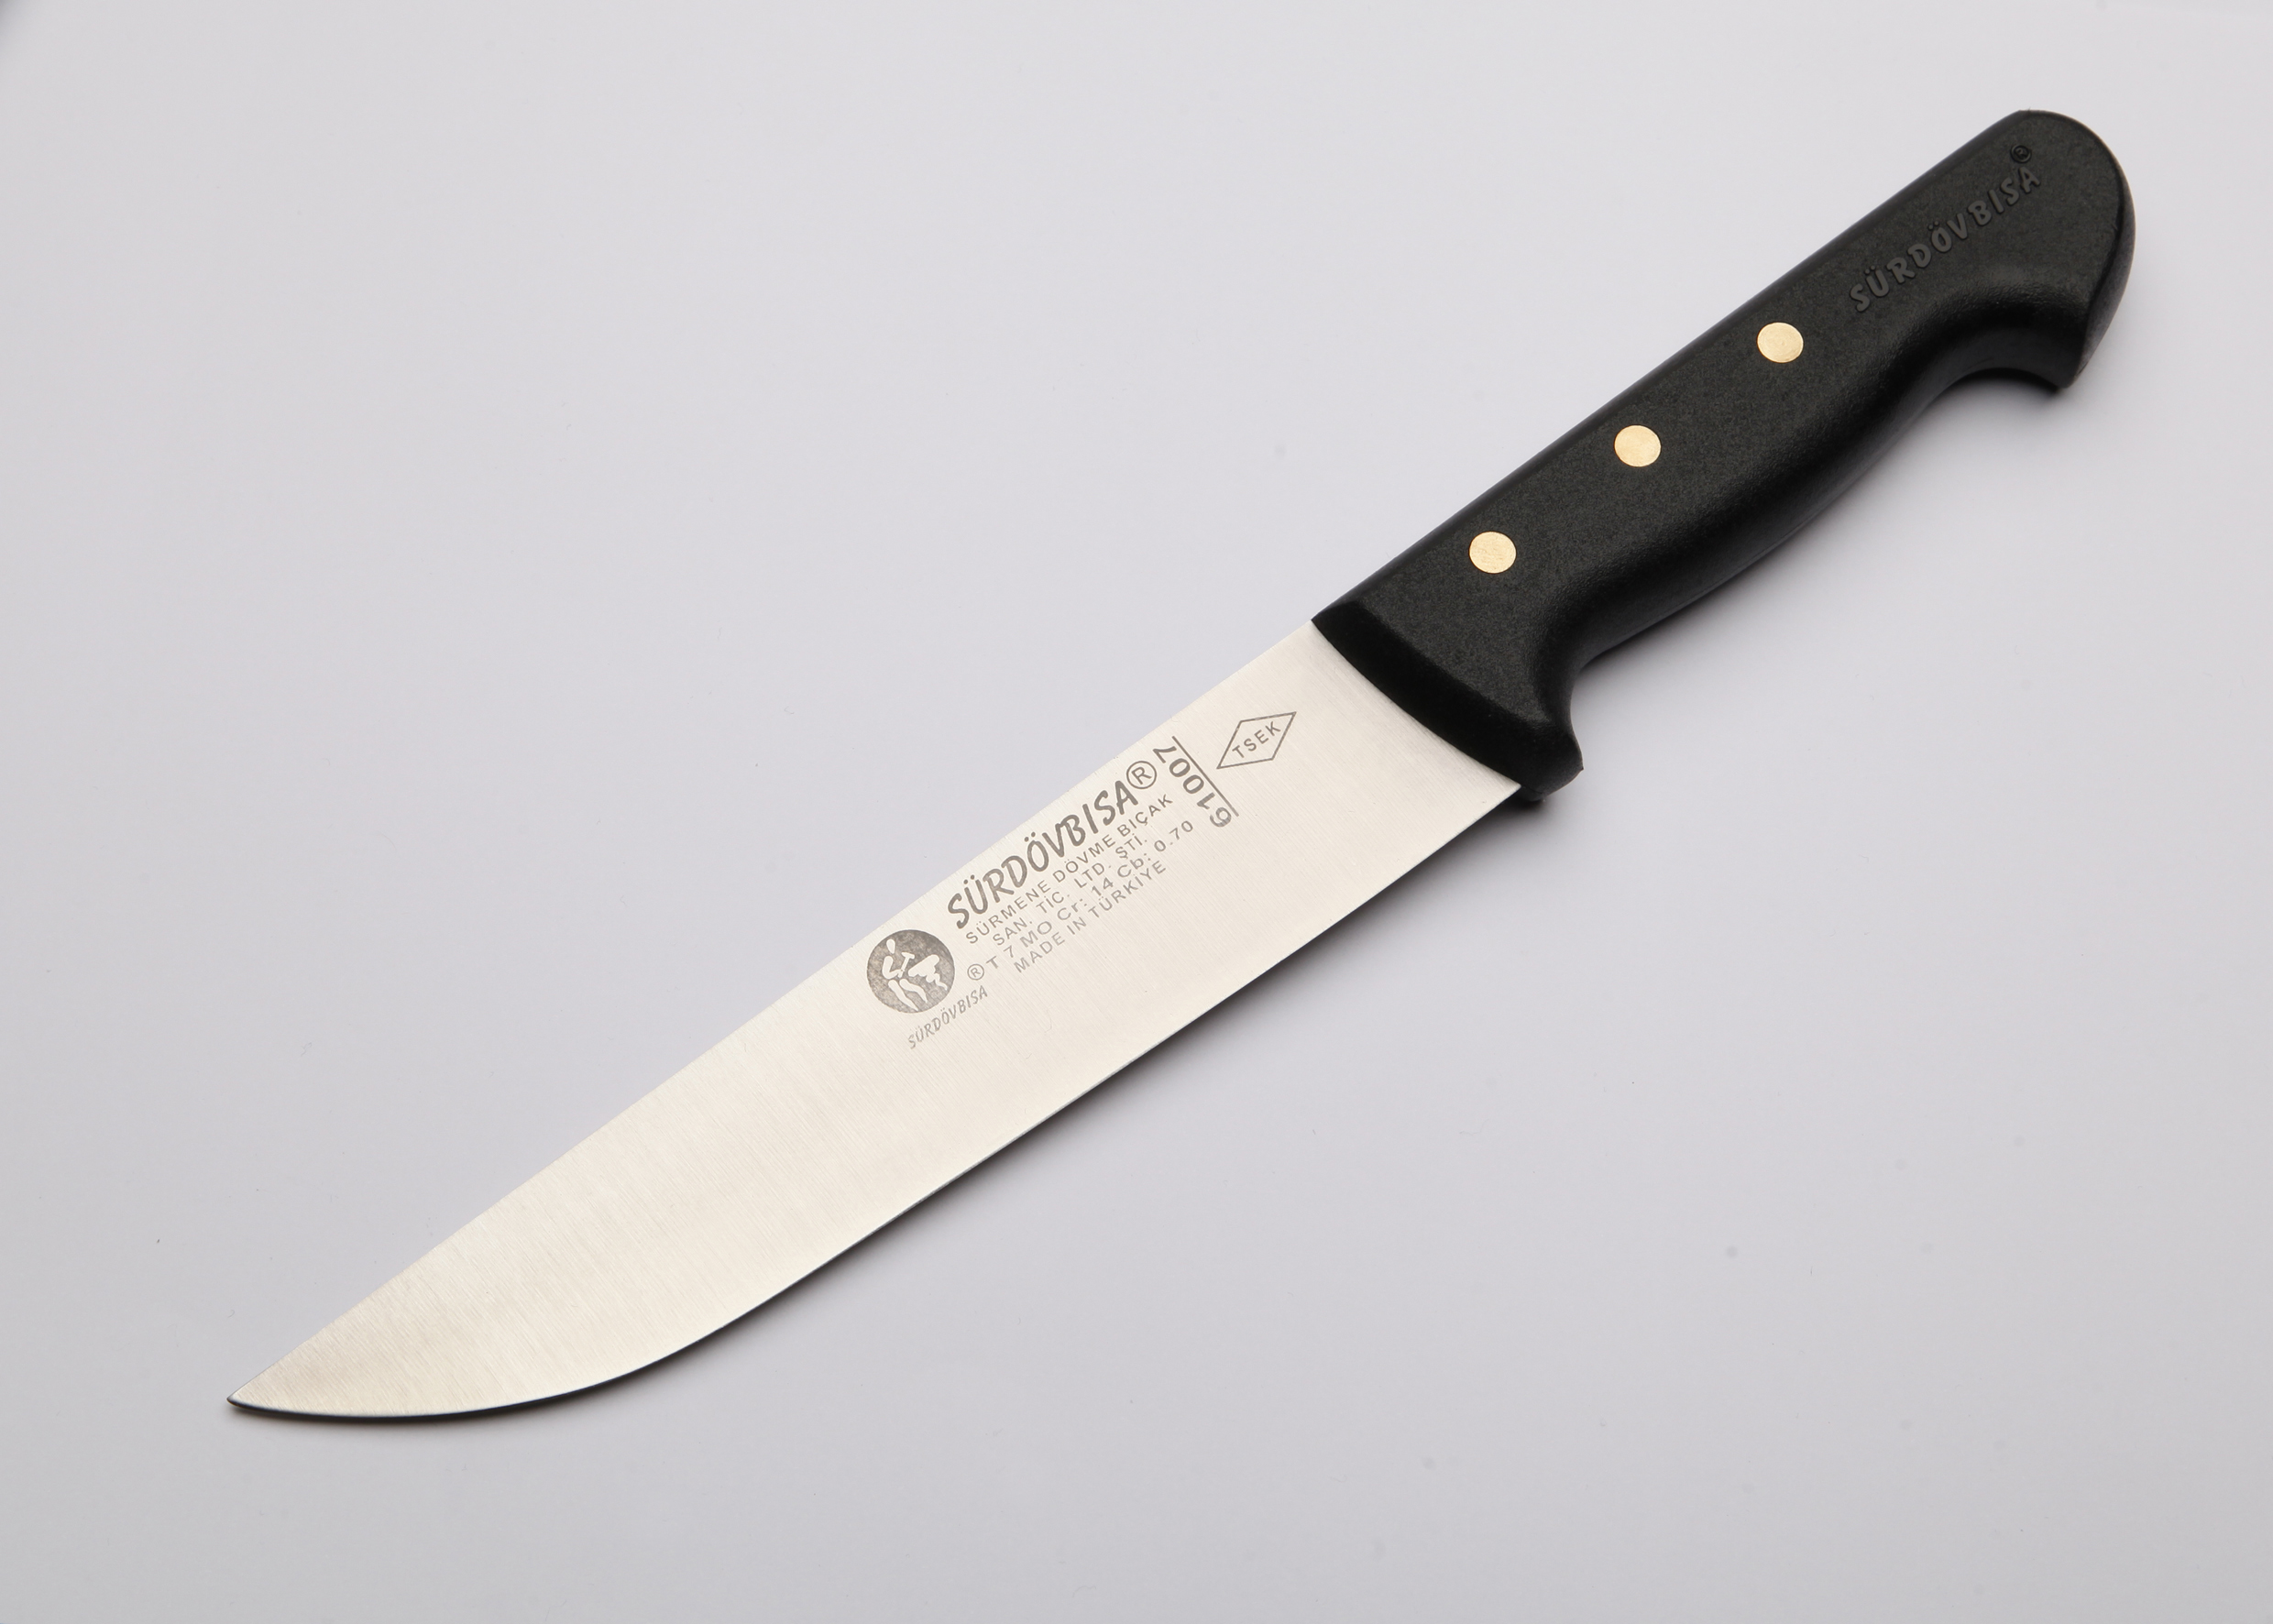 F61007 SÜRDÖVBISA Pimli Plastik Sap Kasap Bıçağı (Kesim Bıçağı)